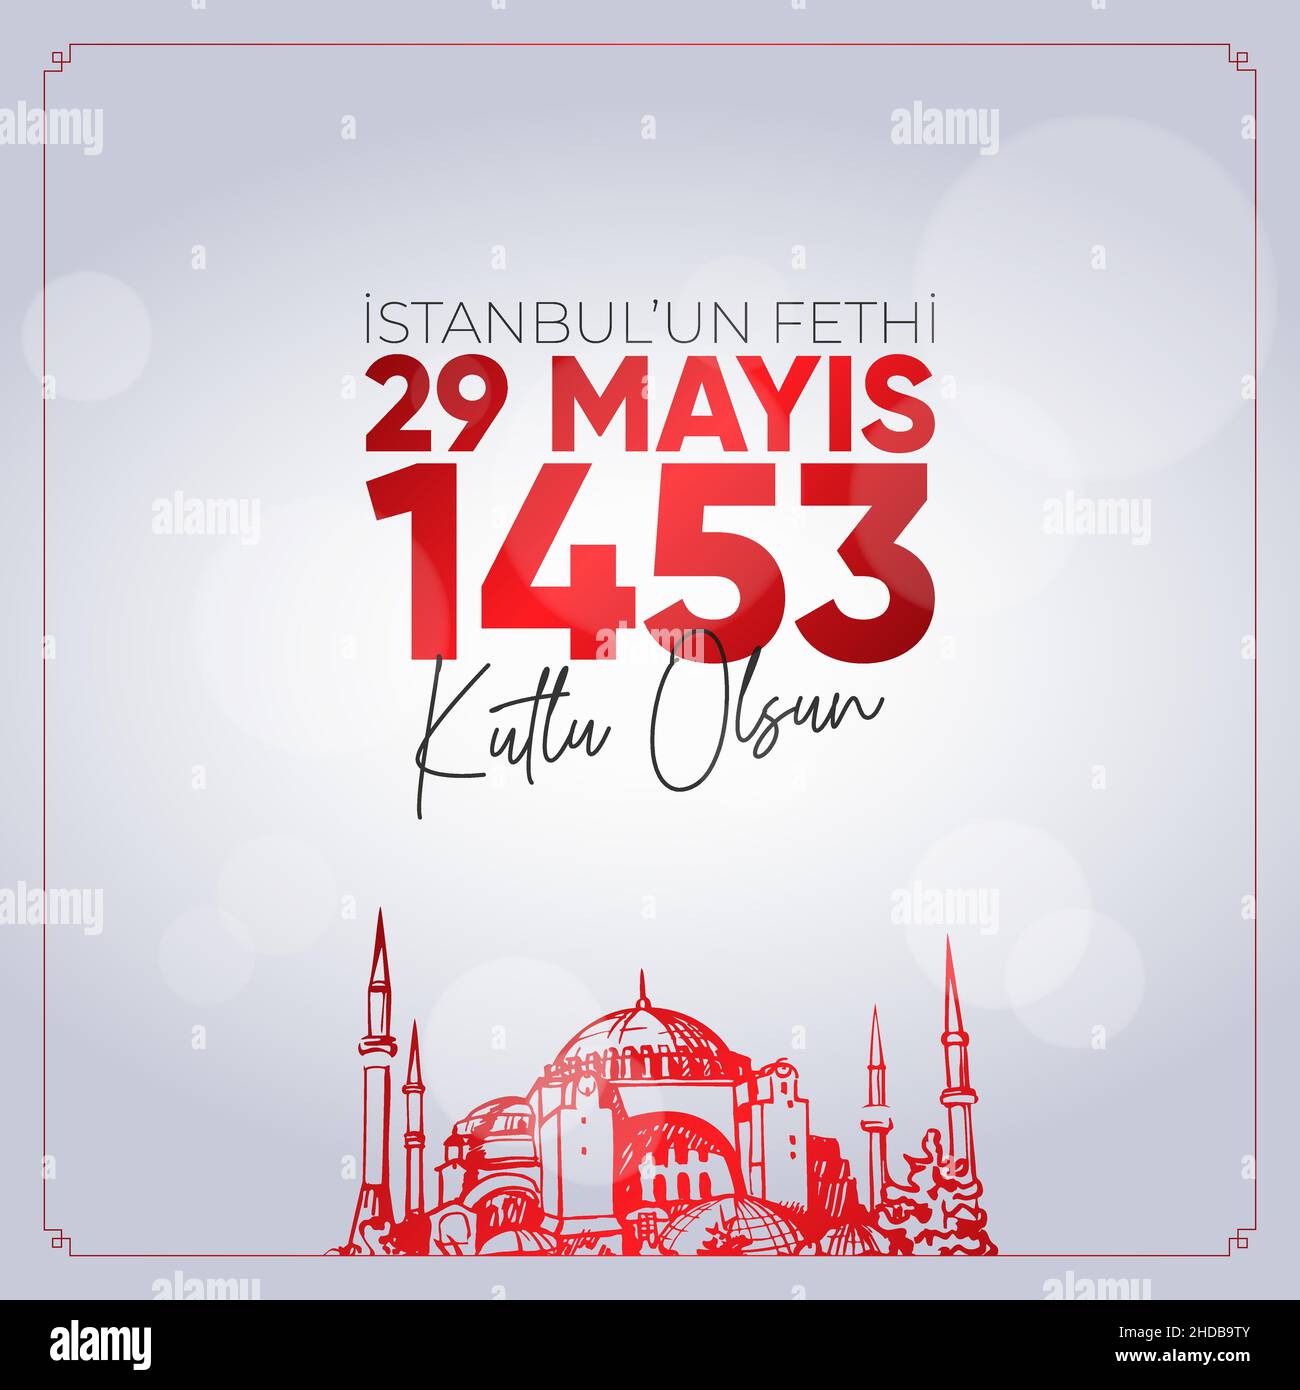 29 Mays 1453 Istanbul'un Fethi Kutlu Olsun. Übersetzung: Mai 29 Glückliche Eroberung Istanbuls. Stock Vektor